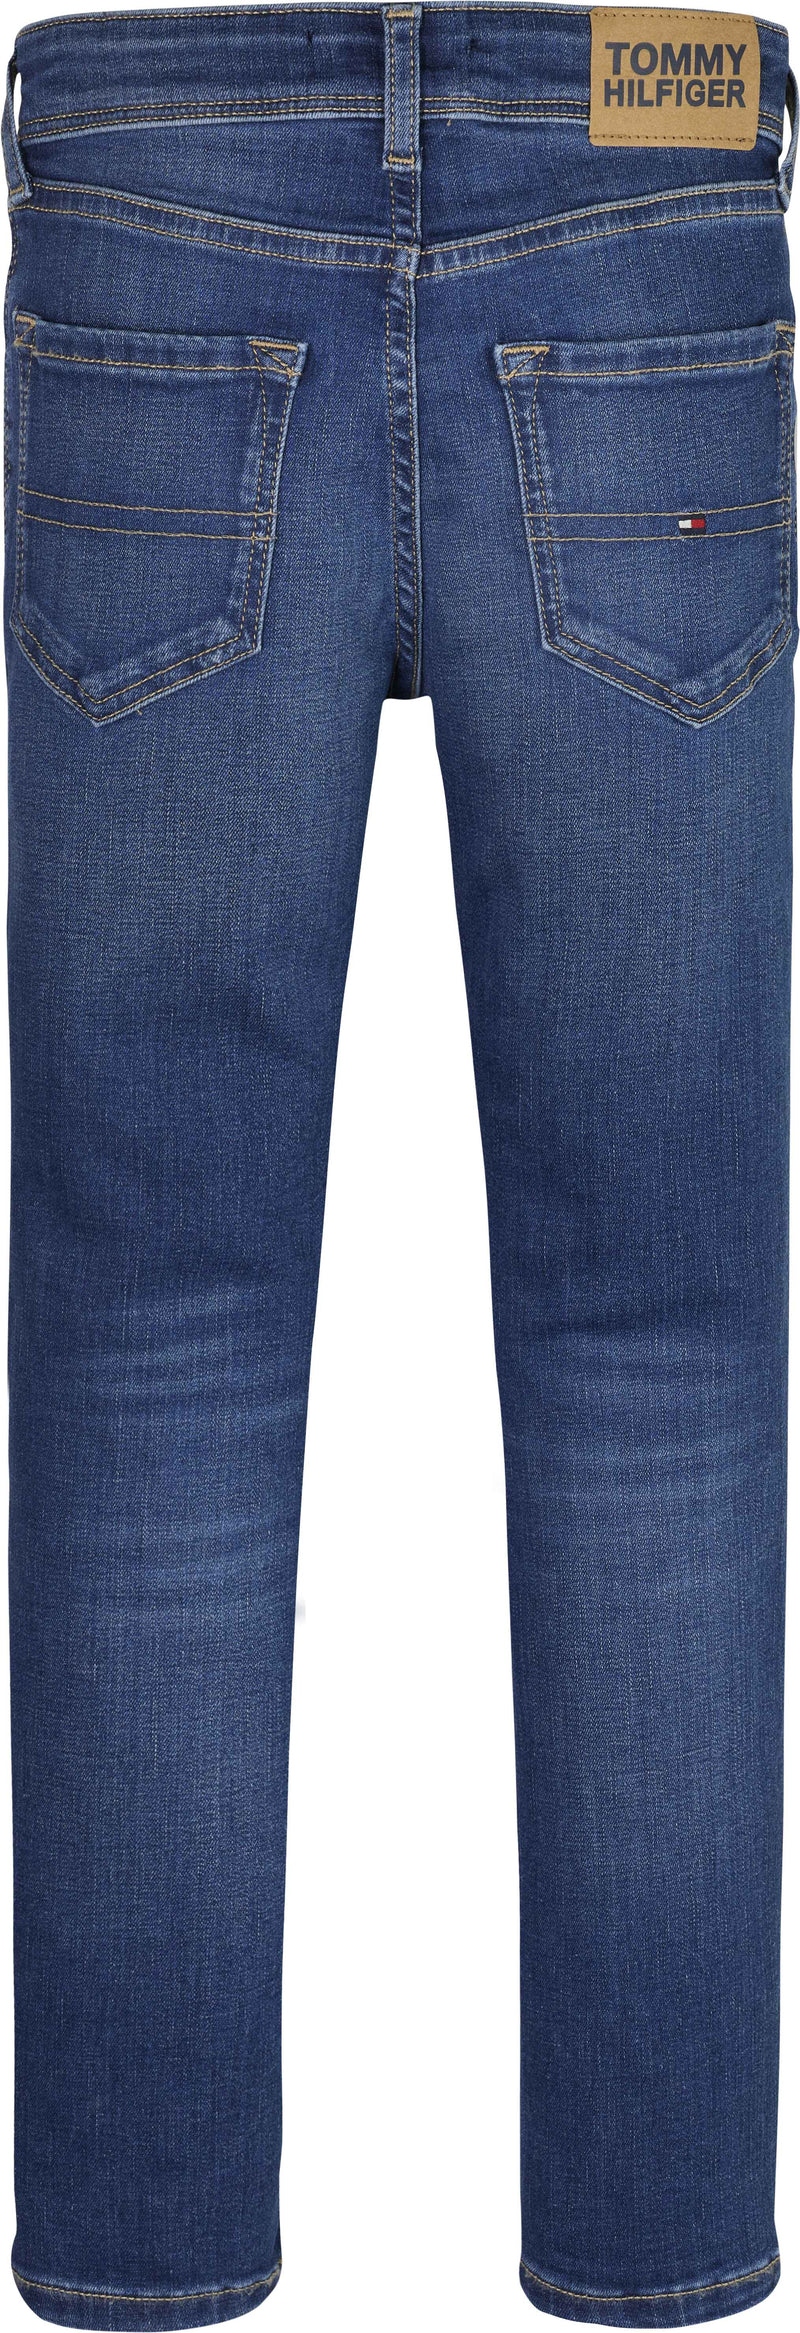 Tommy Hilfiger Scanton Jeans - Mid Wash